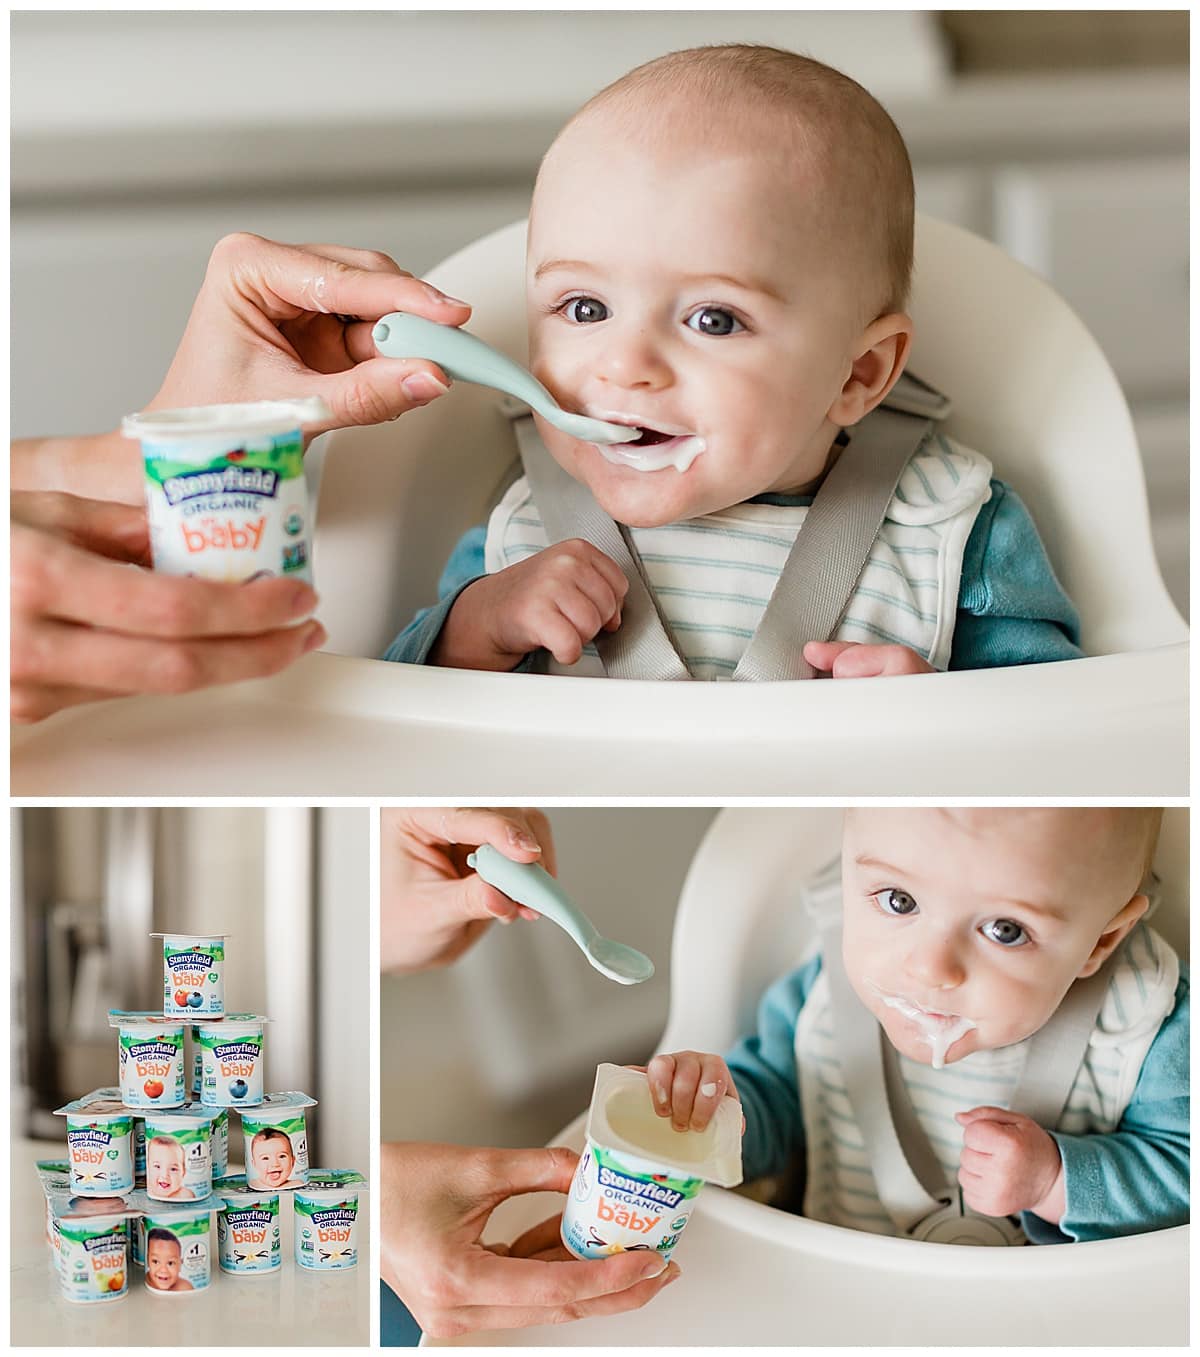 Stonyfield yogurt collage